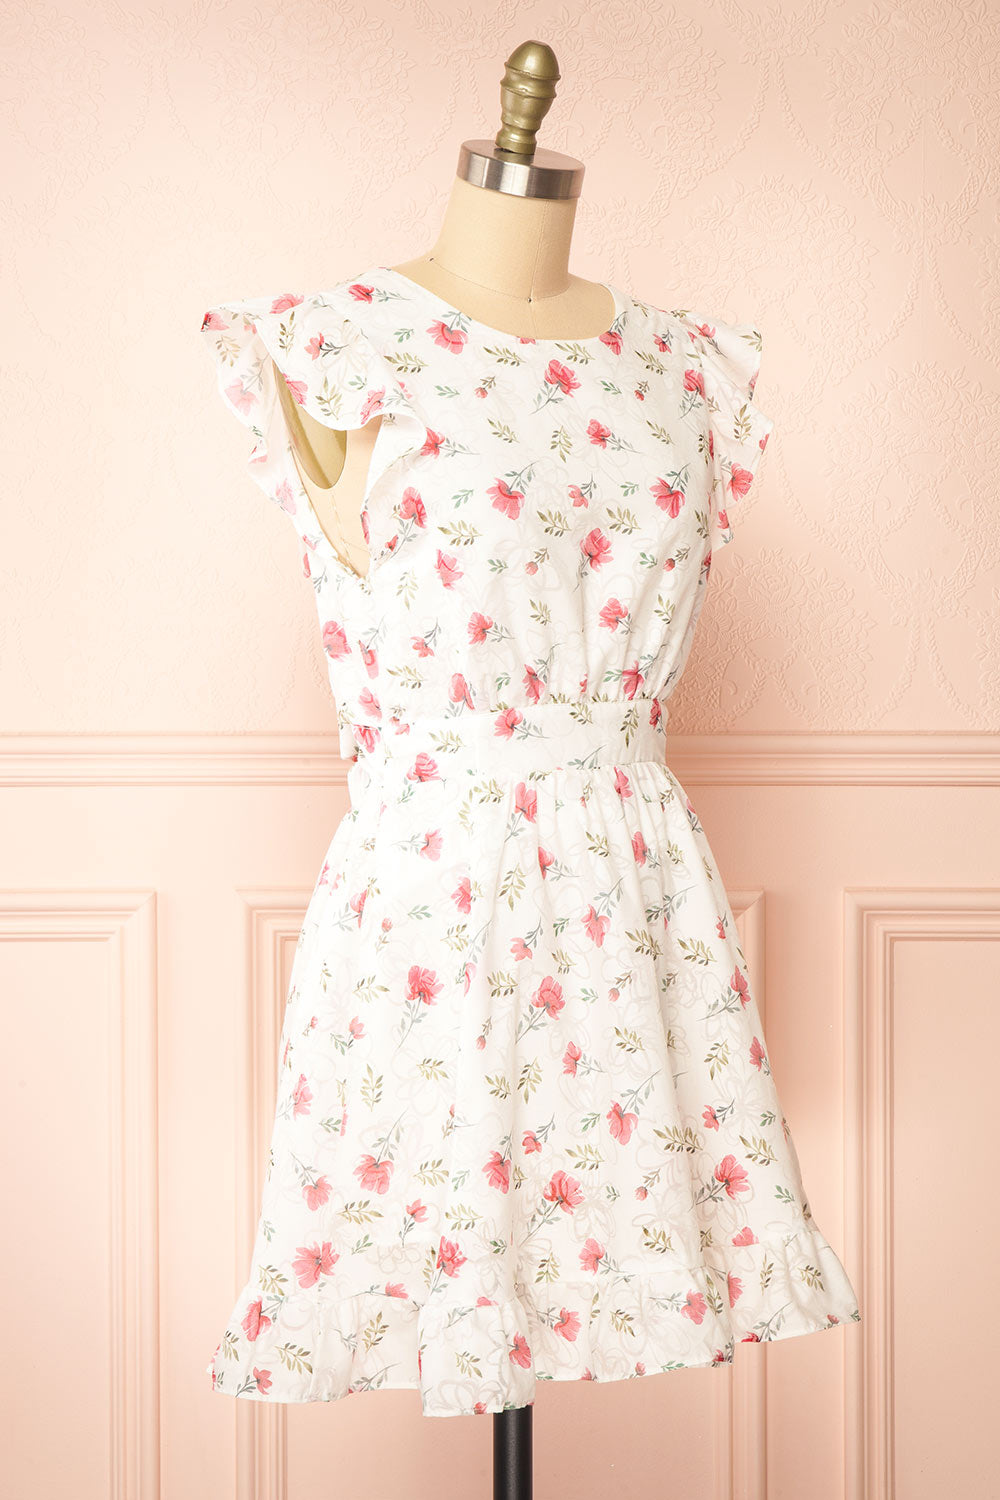 Prunne Short White Floral Dress w/ Open Back | Boutique 1861 side view